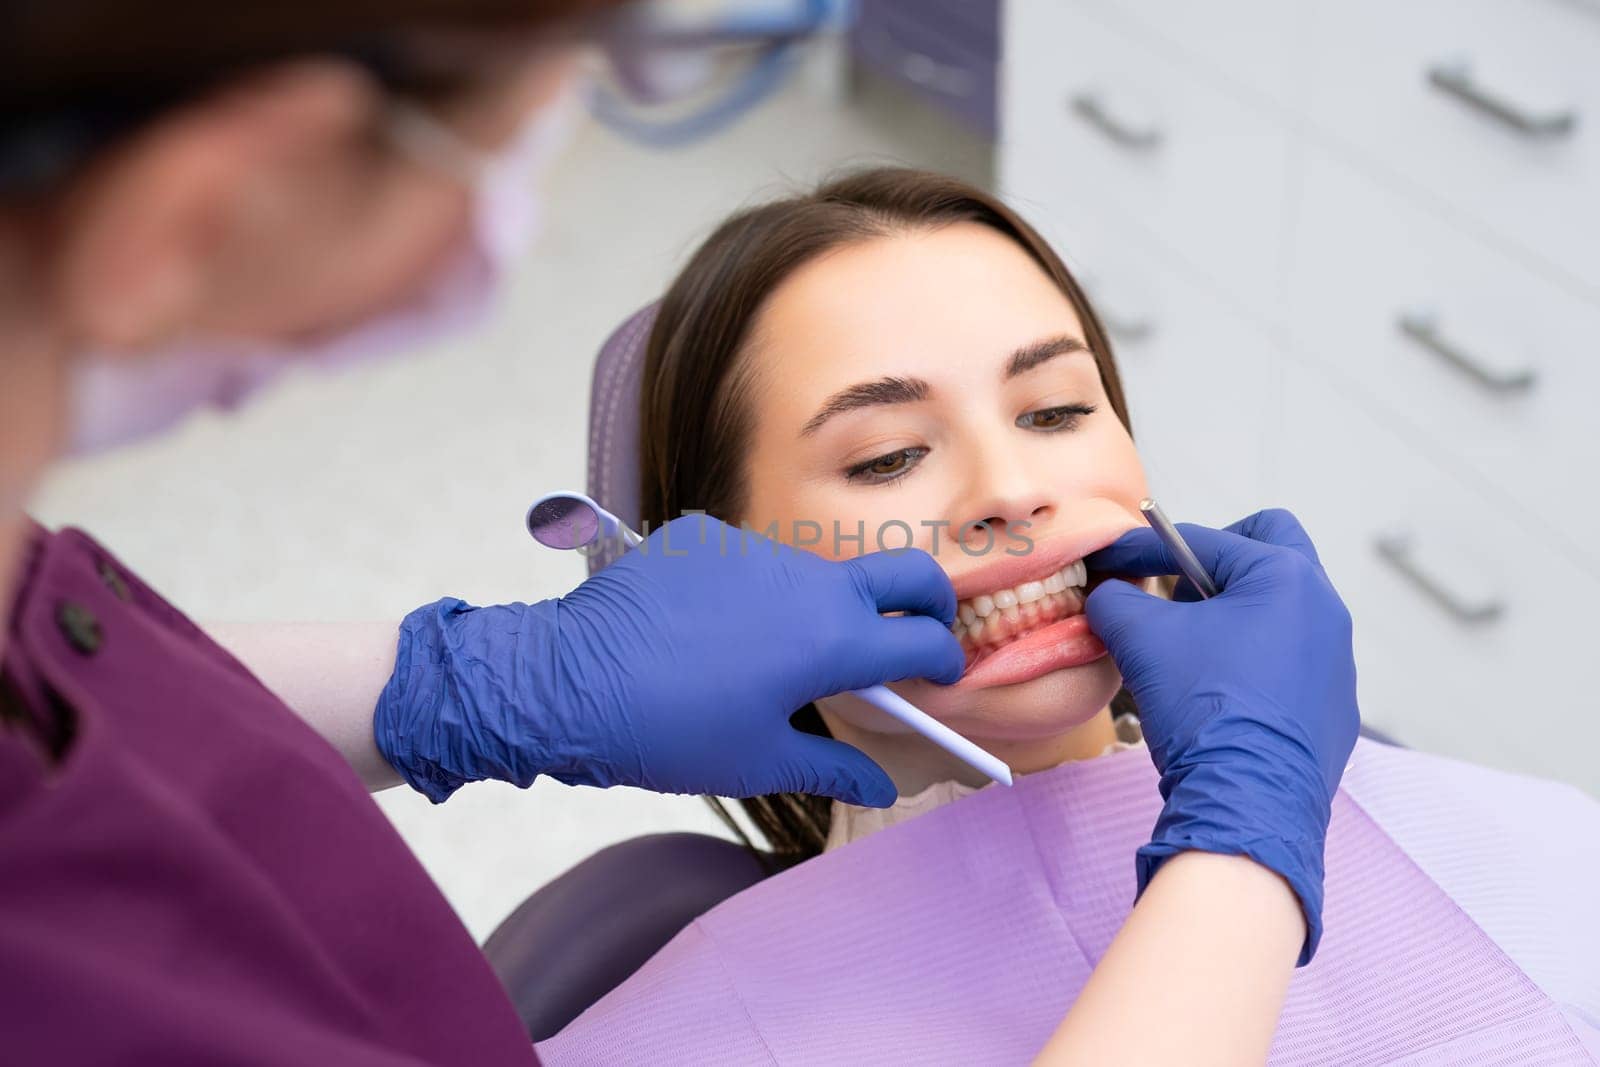 Dentist checking patients bite in dental clinic by vladimka